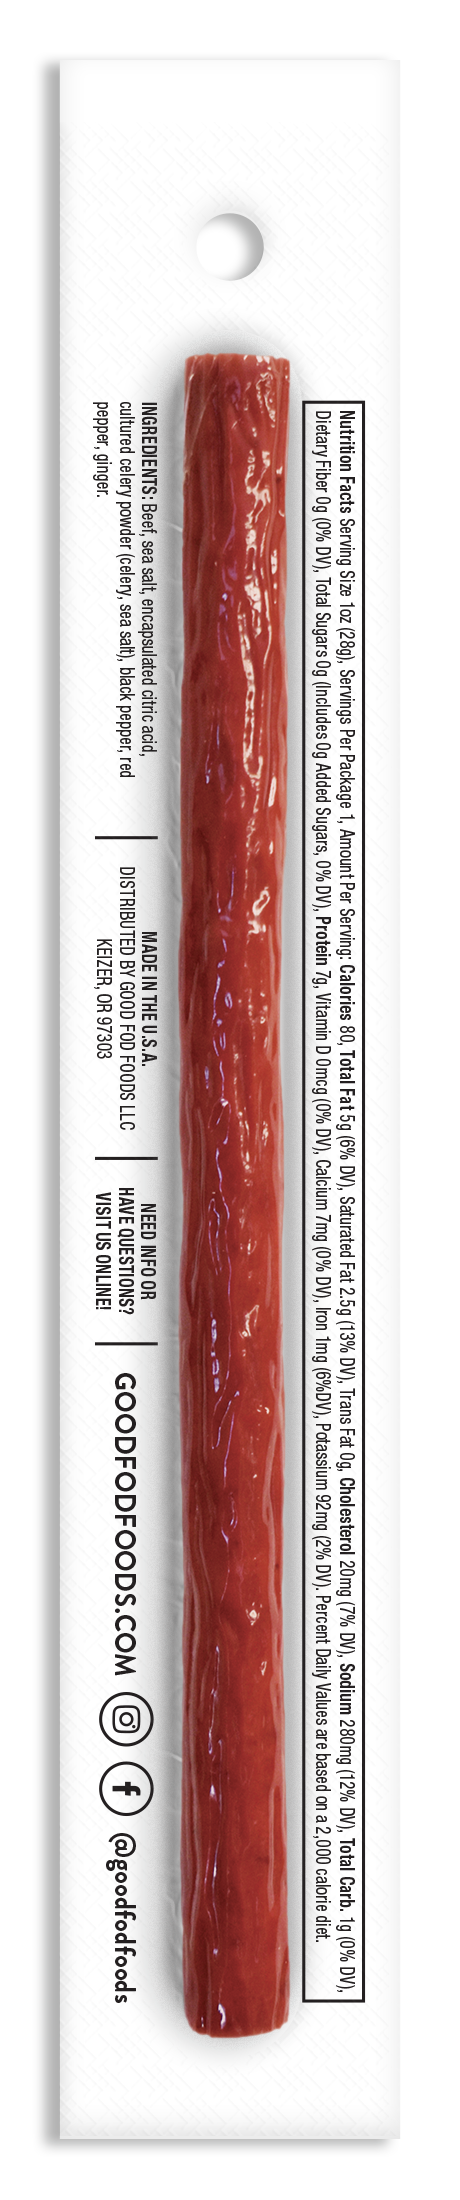 Good Fod Original Meat Stick 1-10ct